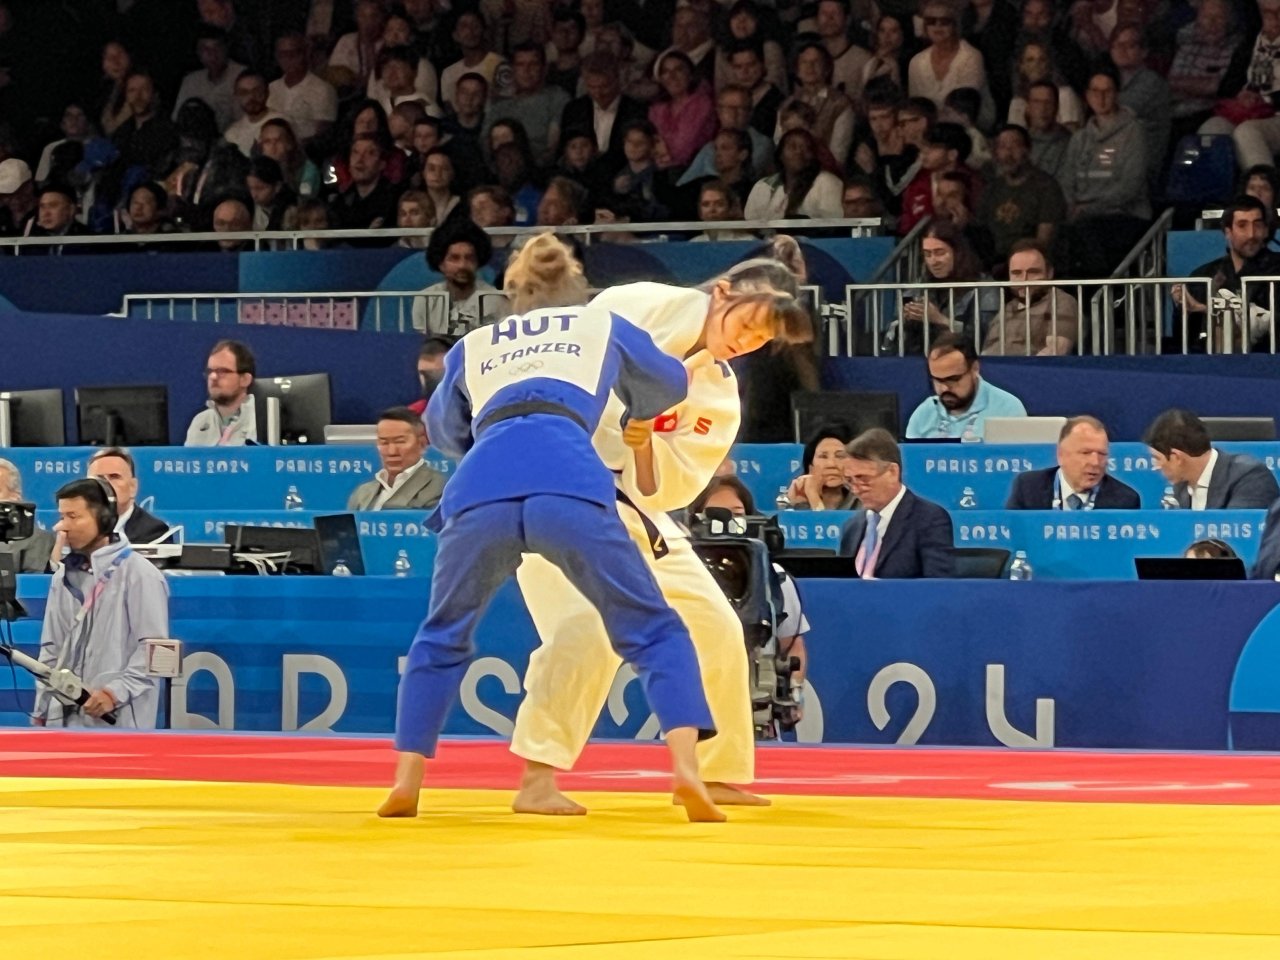 Judoka Wong Ka-lee eliminated from Paris Olympics